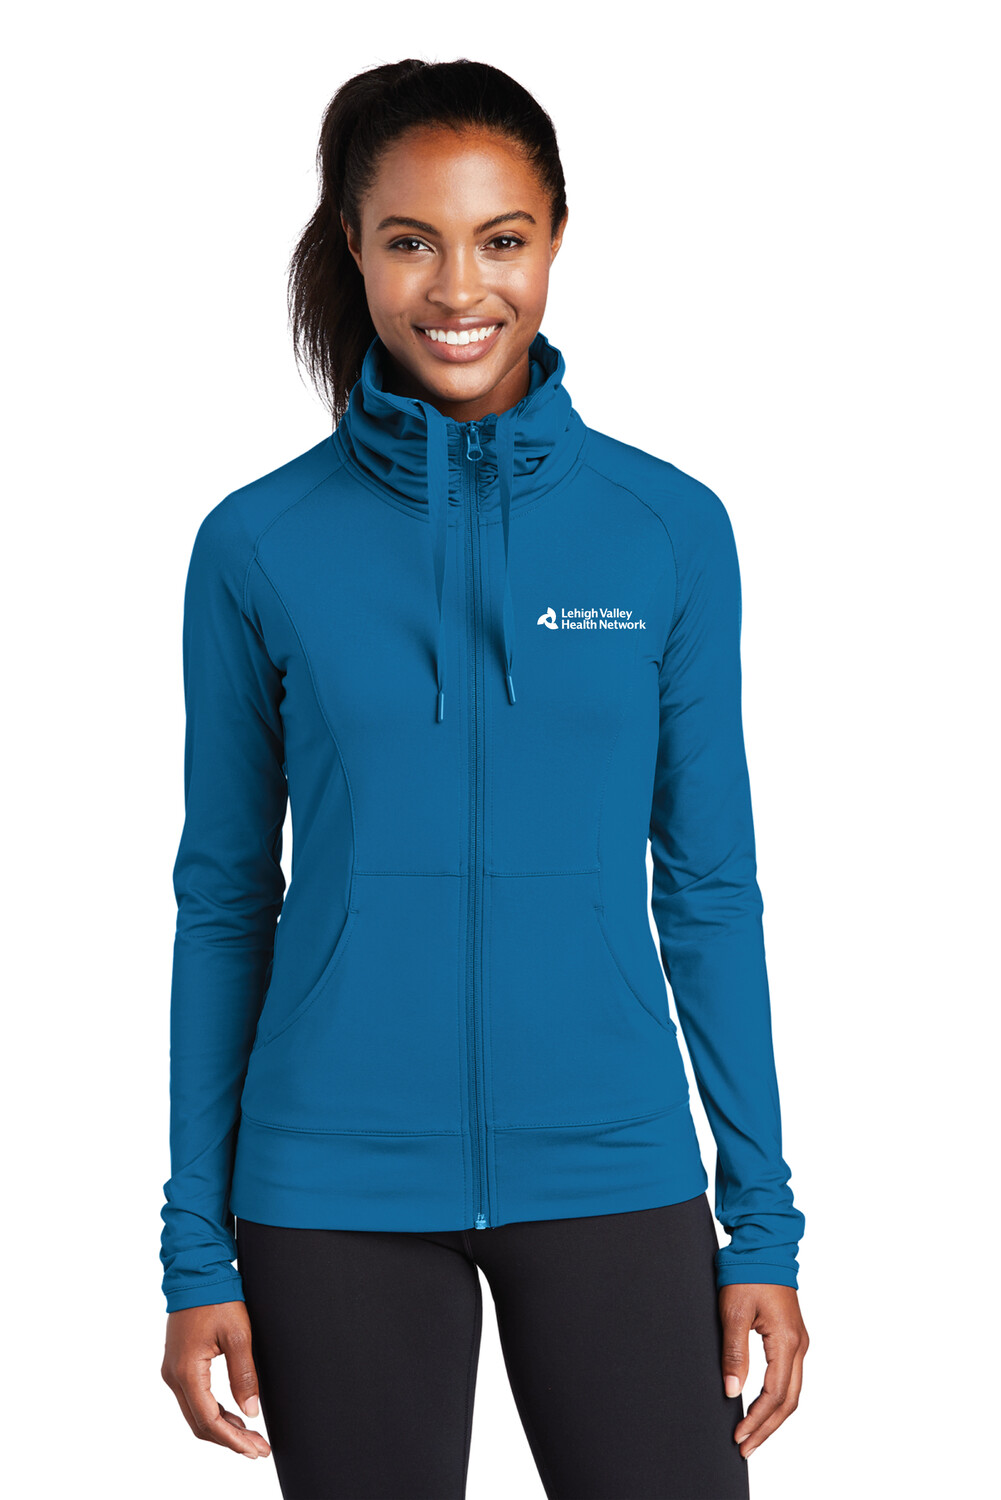 Sport-Tek® Ladies Sport-Wick® Stretch Full-Zip Jacket